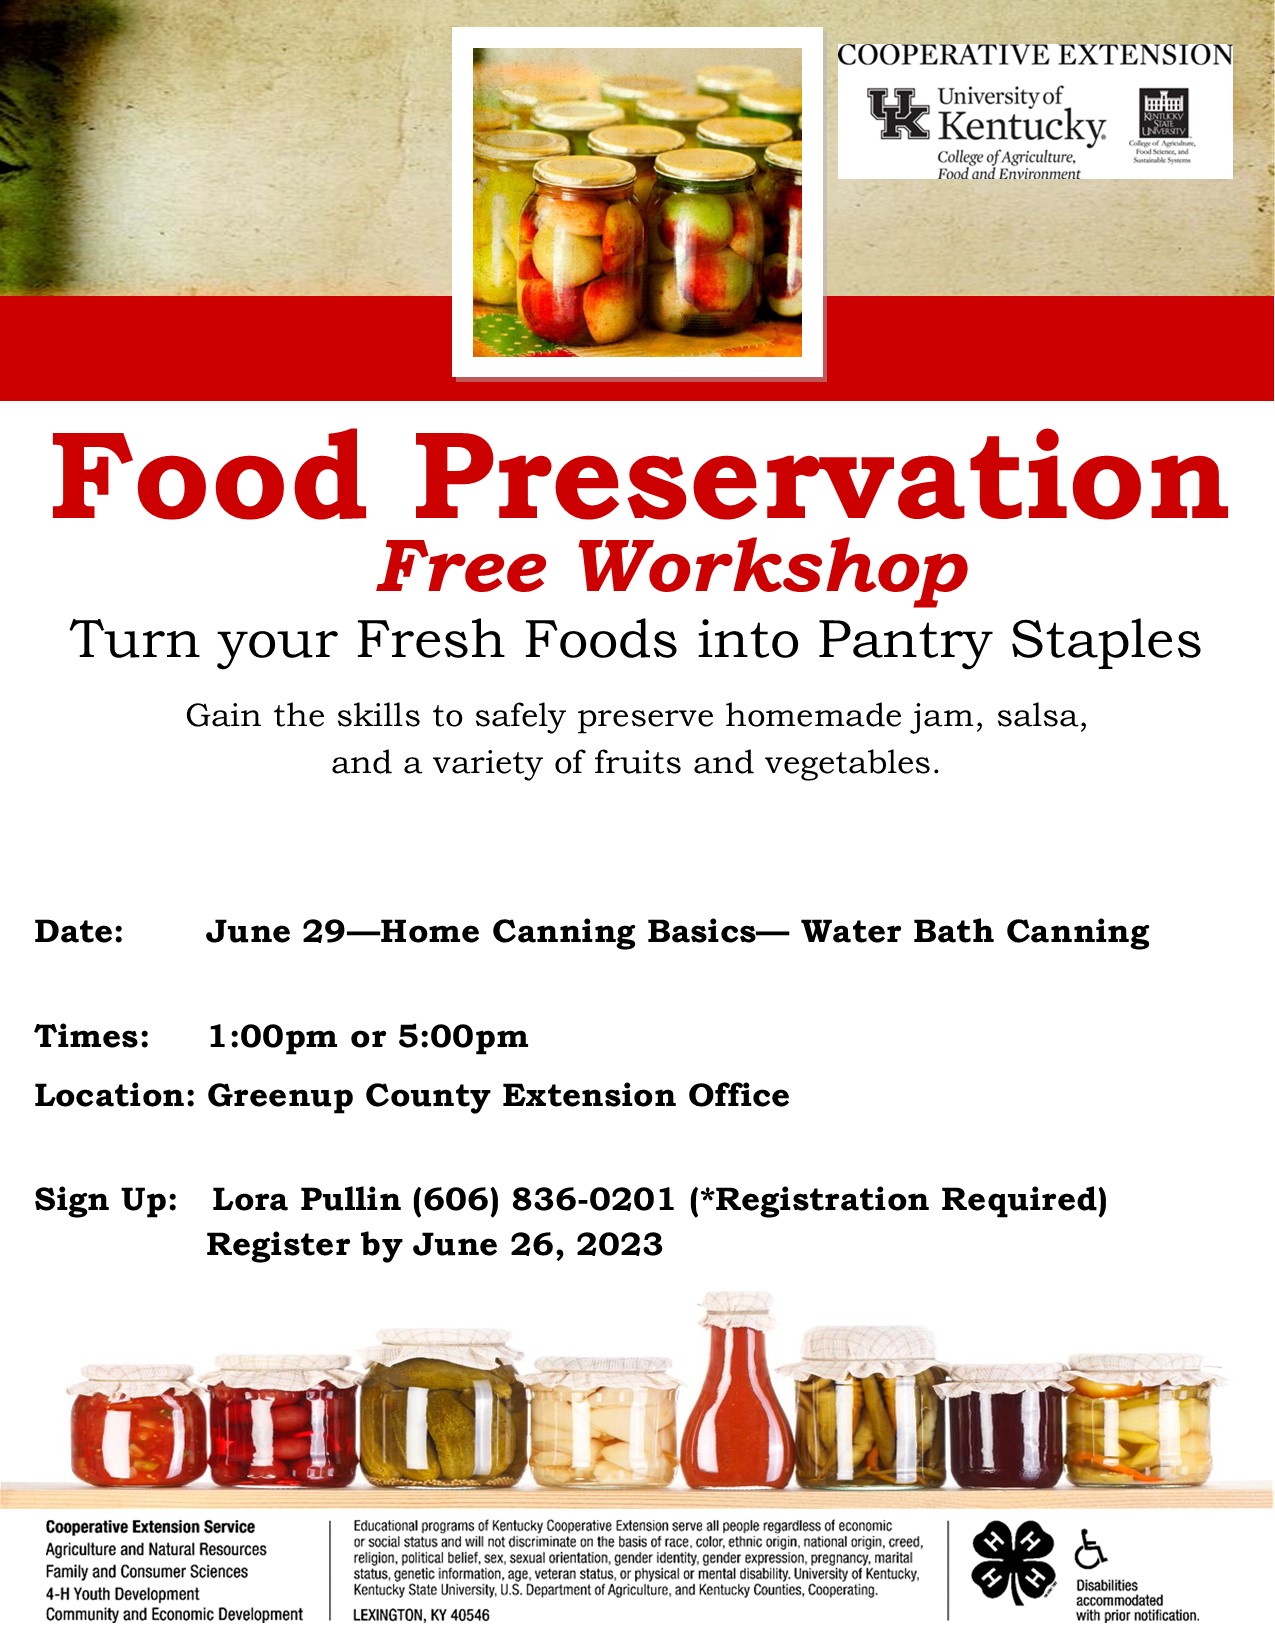 Food Preservation Workshop Greenup County Extension Office